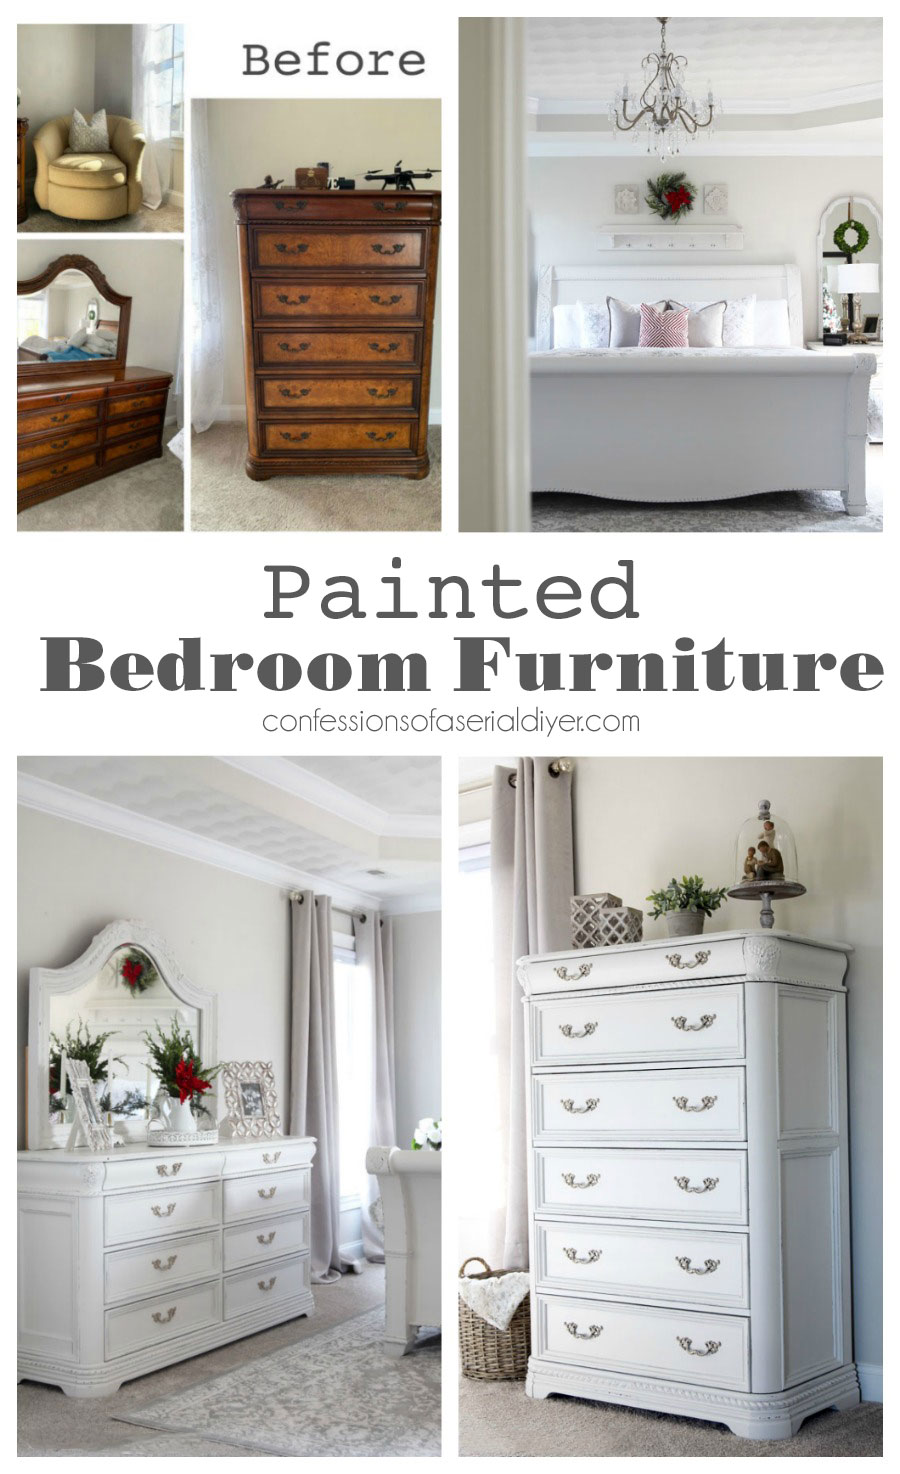 Painted Bedroom Furniture